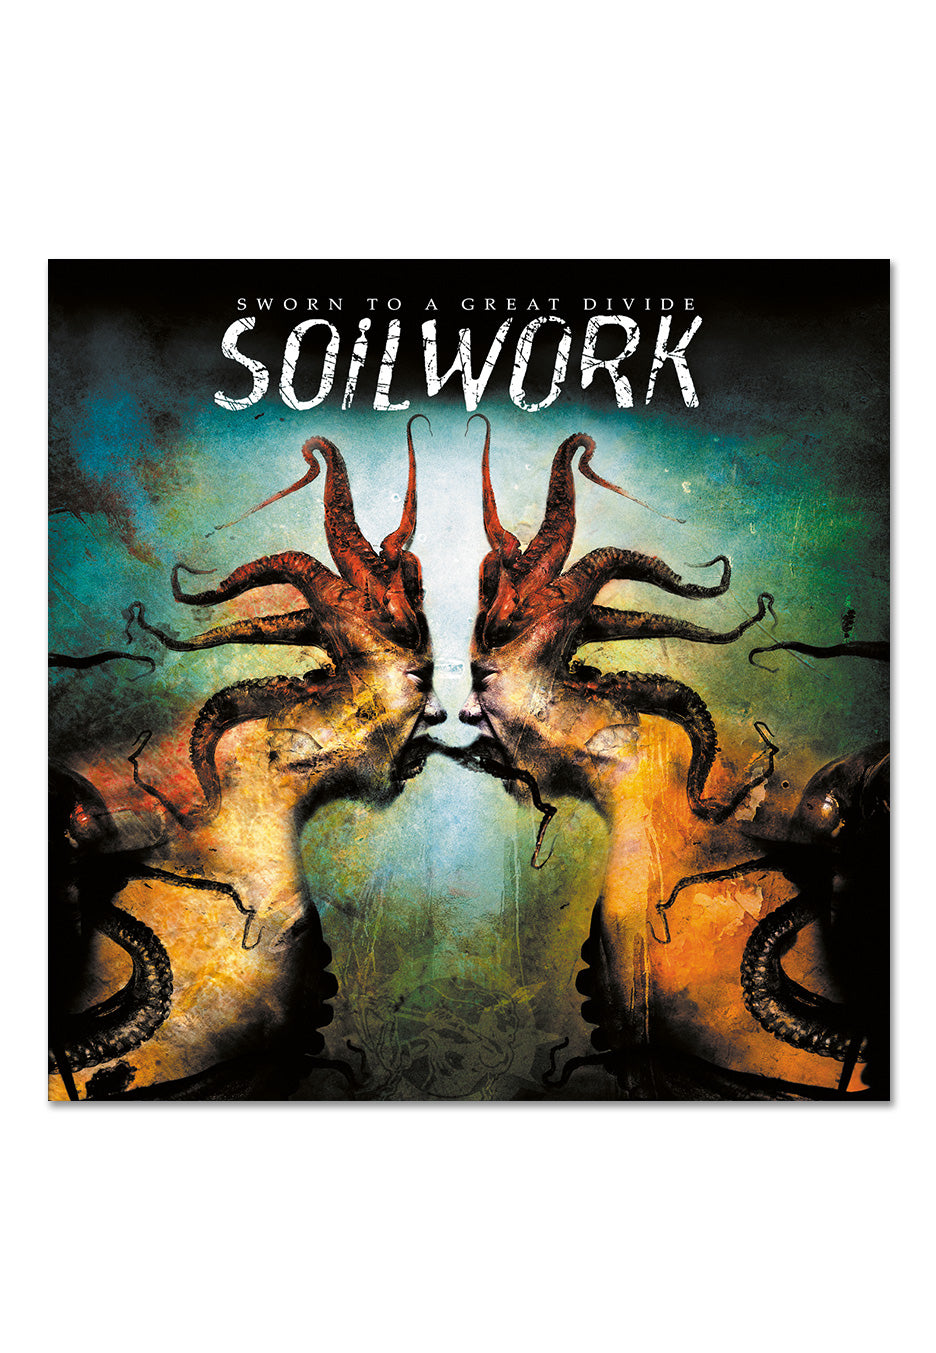 Soilwork - Sworn To A Great Divide Ltd. Orange/Green Sunburst - Colored Vinyl